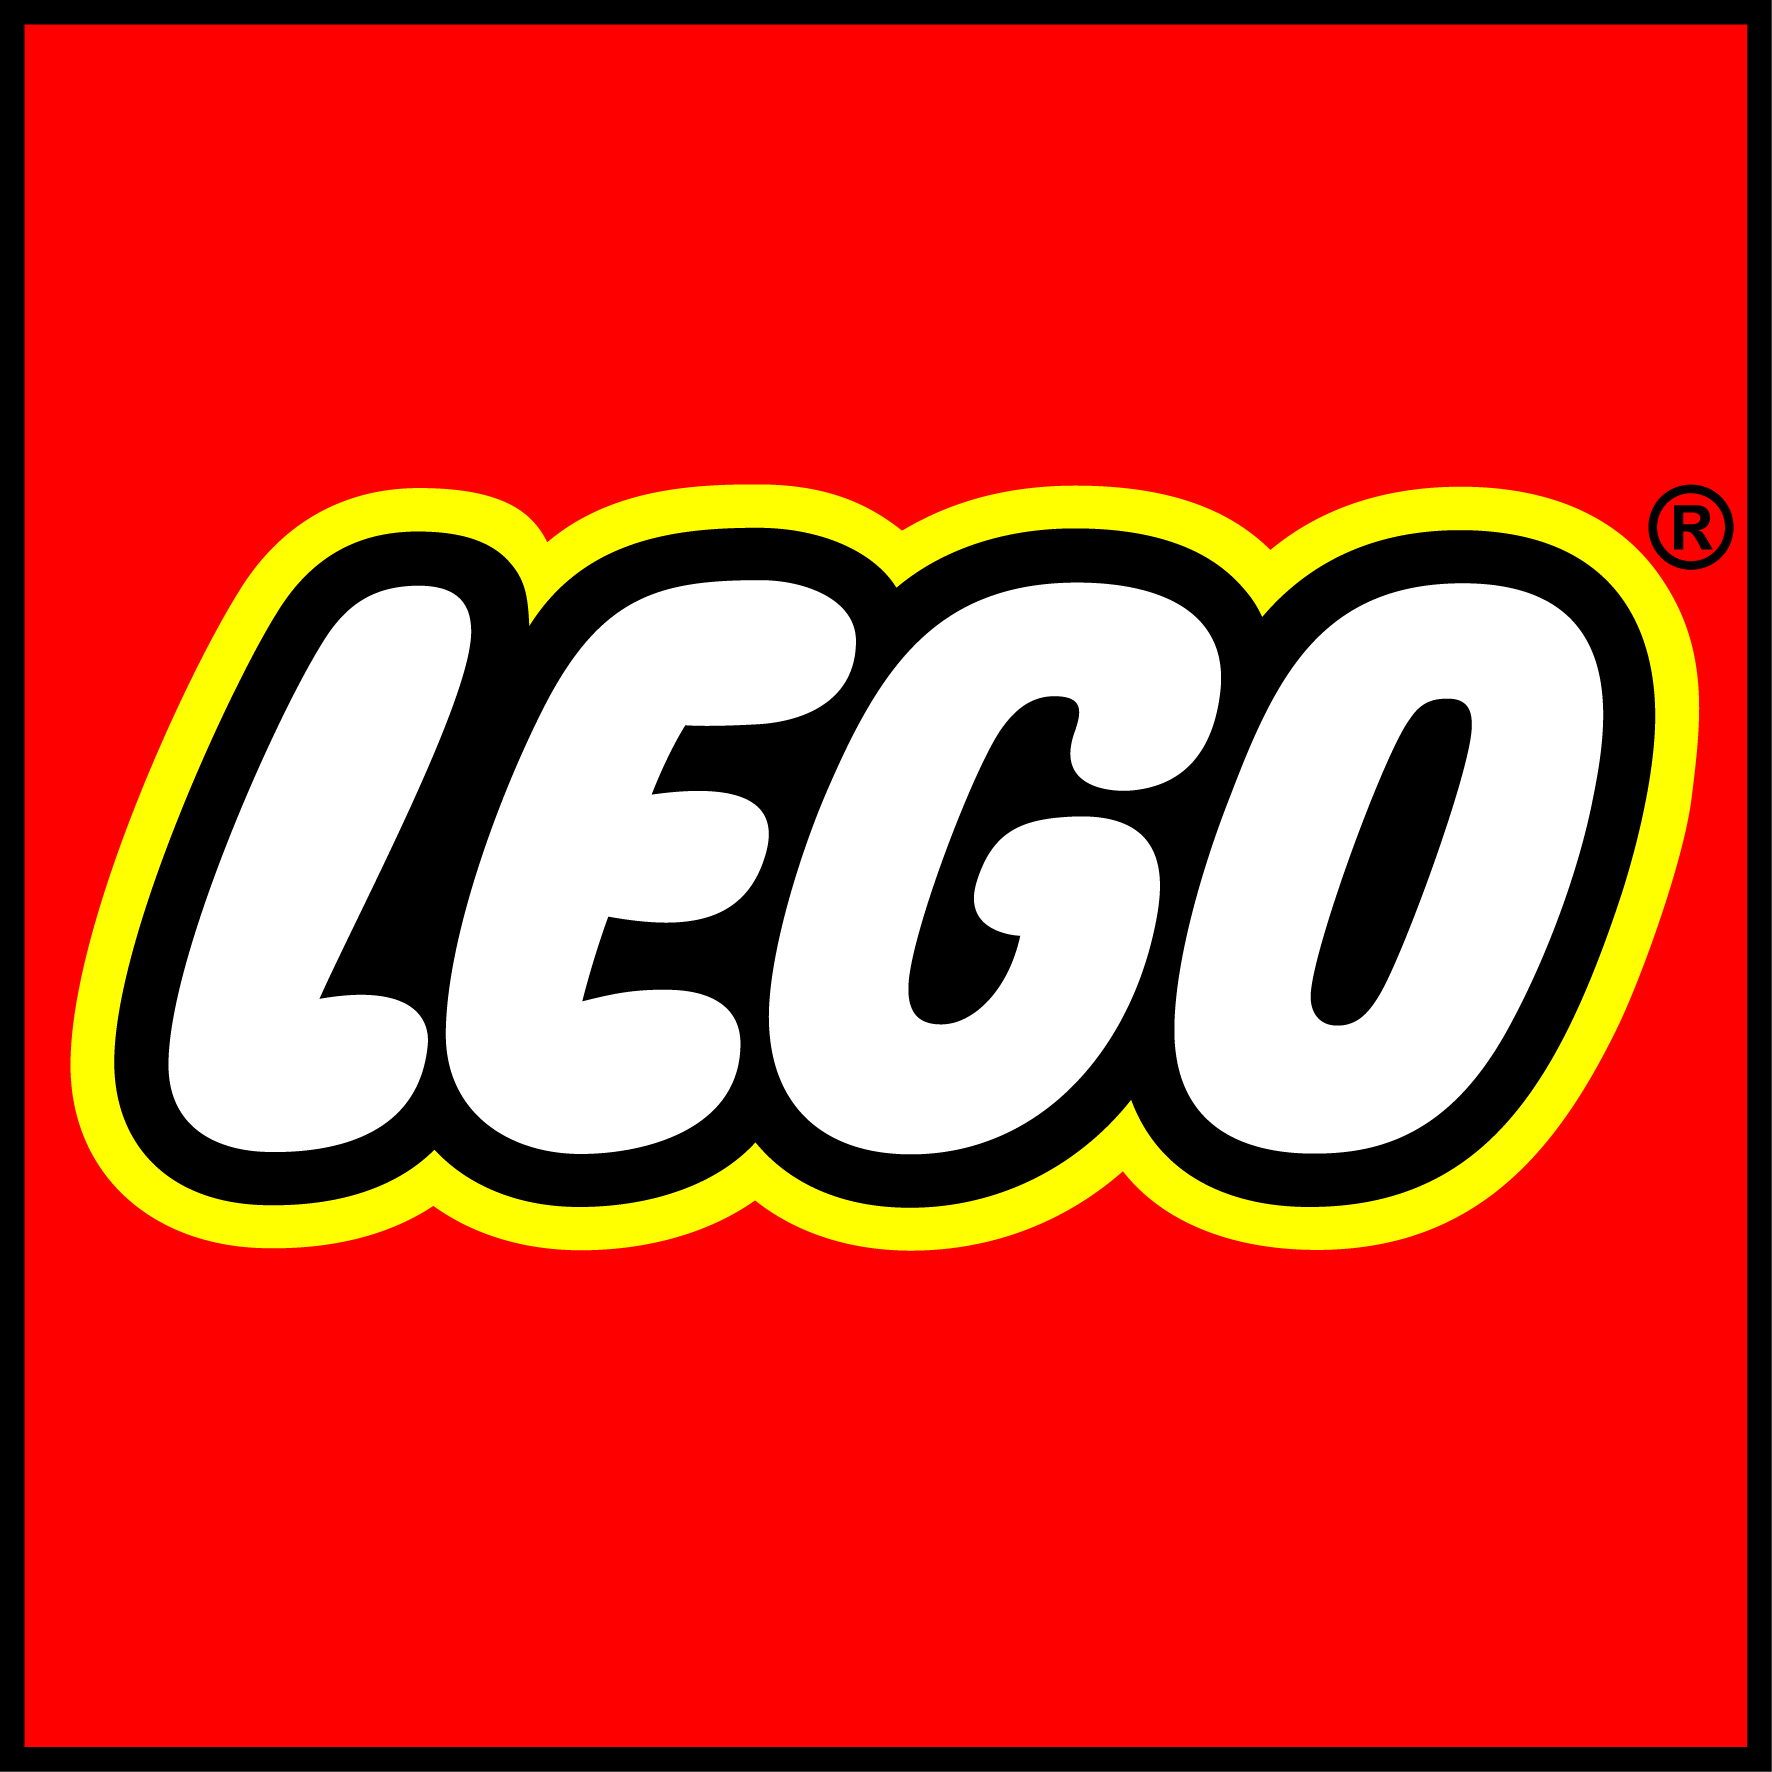 Download Lego Logo Download Vector